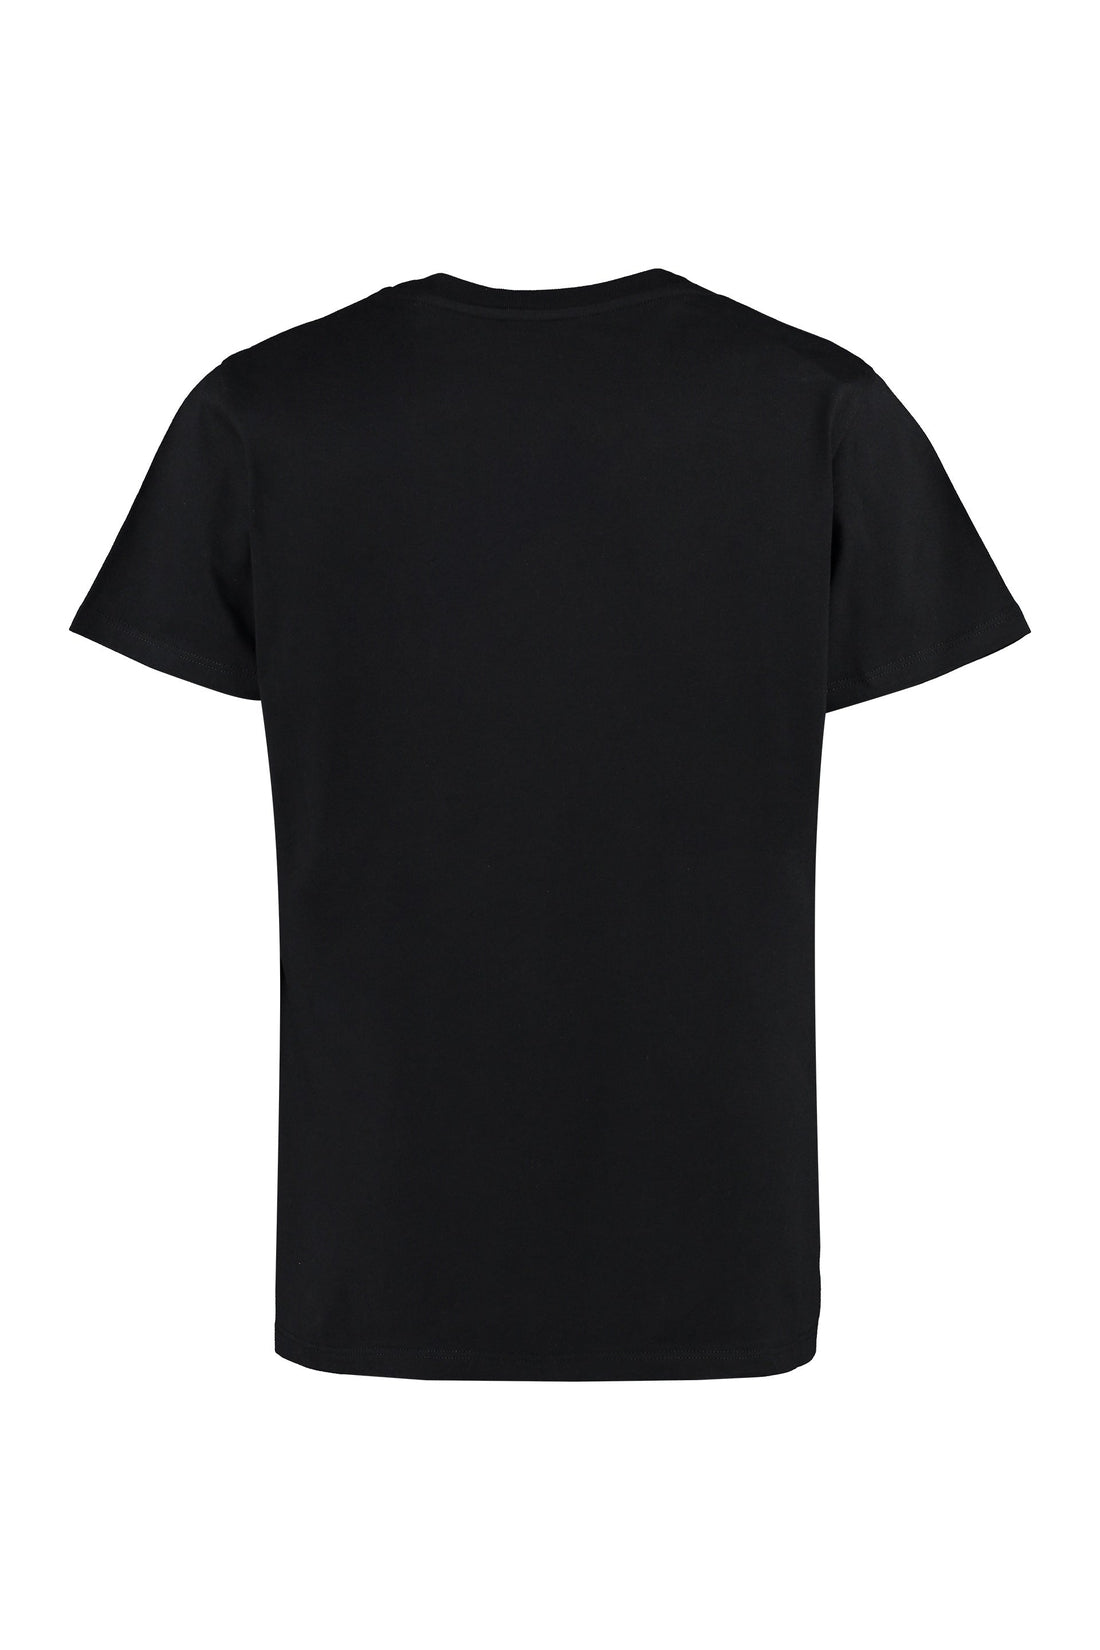 Alexander McQueen-OUTLET-SALE-Printed t-shirt-ARCHIVIST